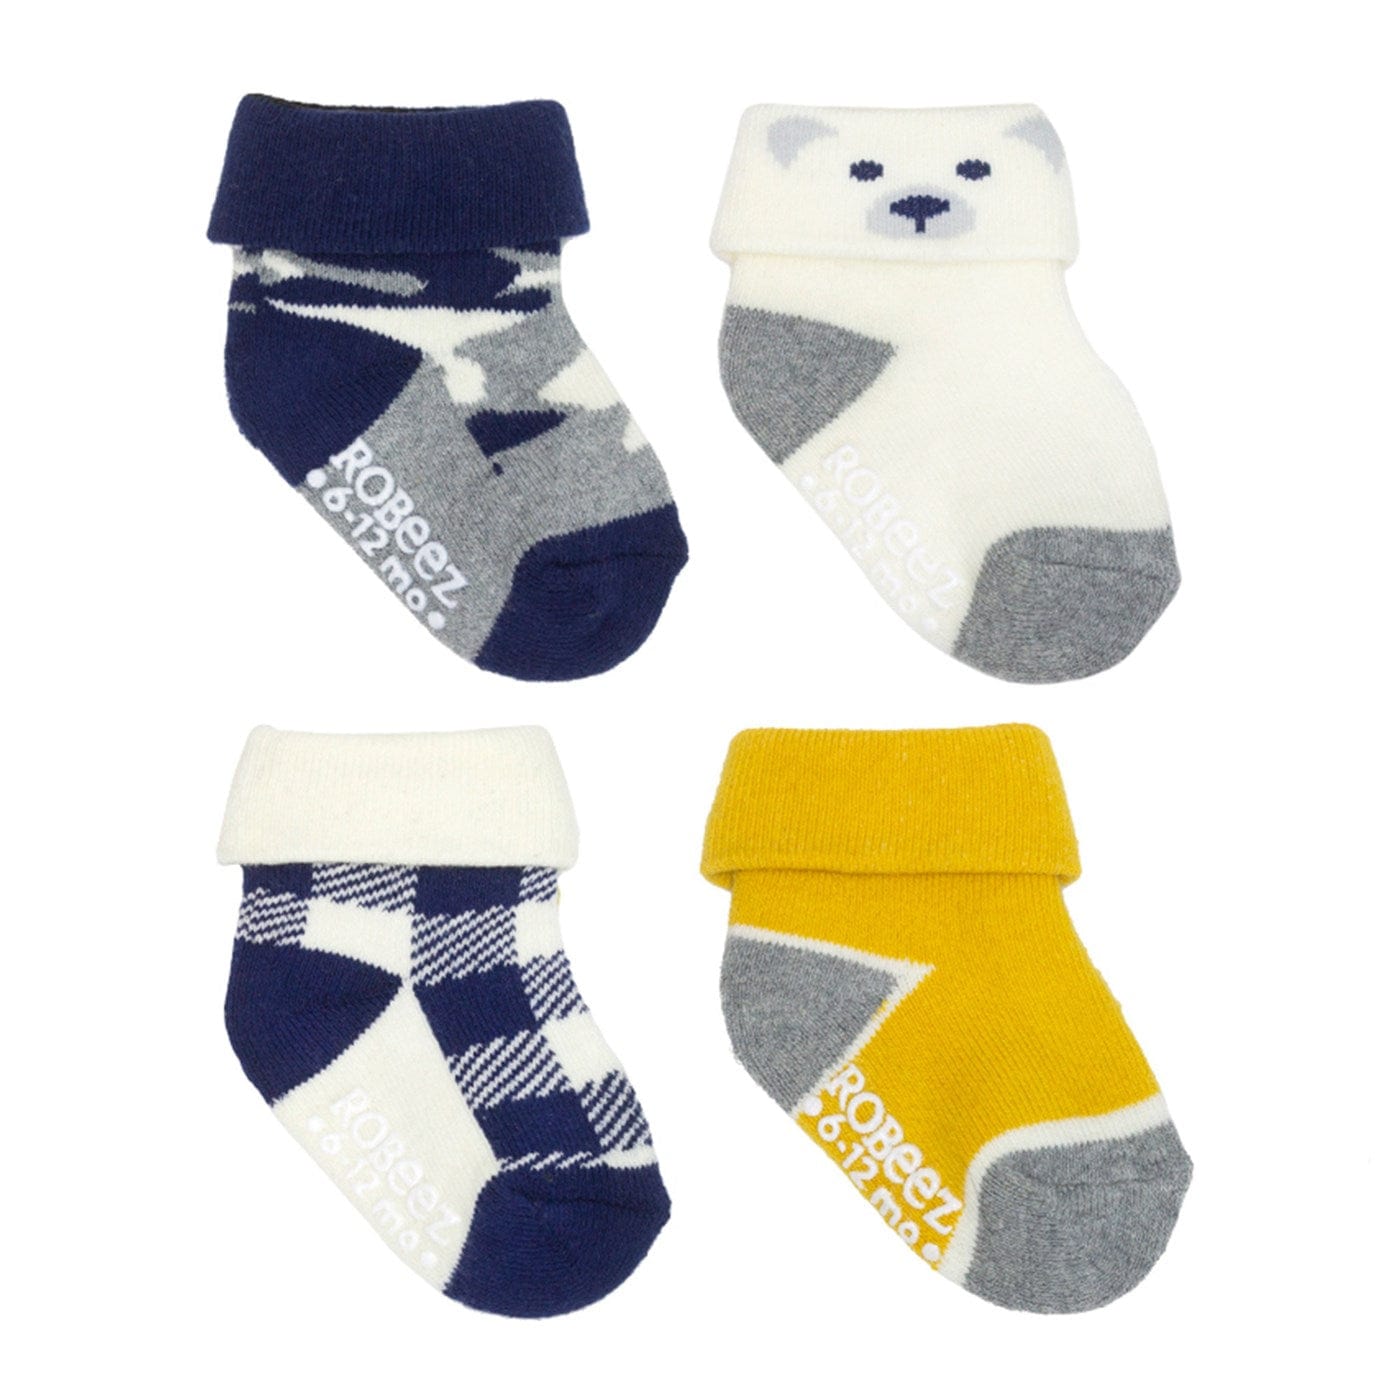 Robeez socks 0-6 M Robeez Non-Skid Socks 8 PK - Beary Cute